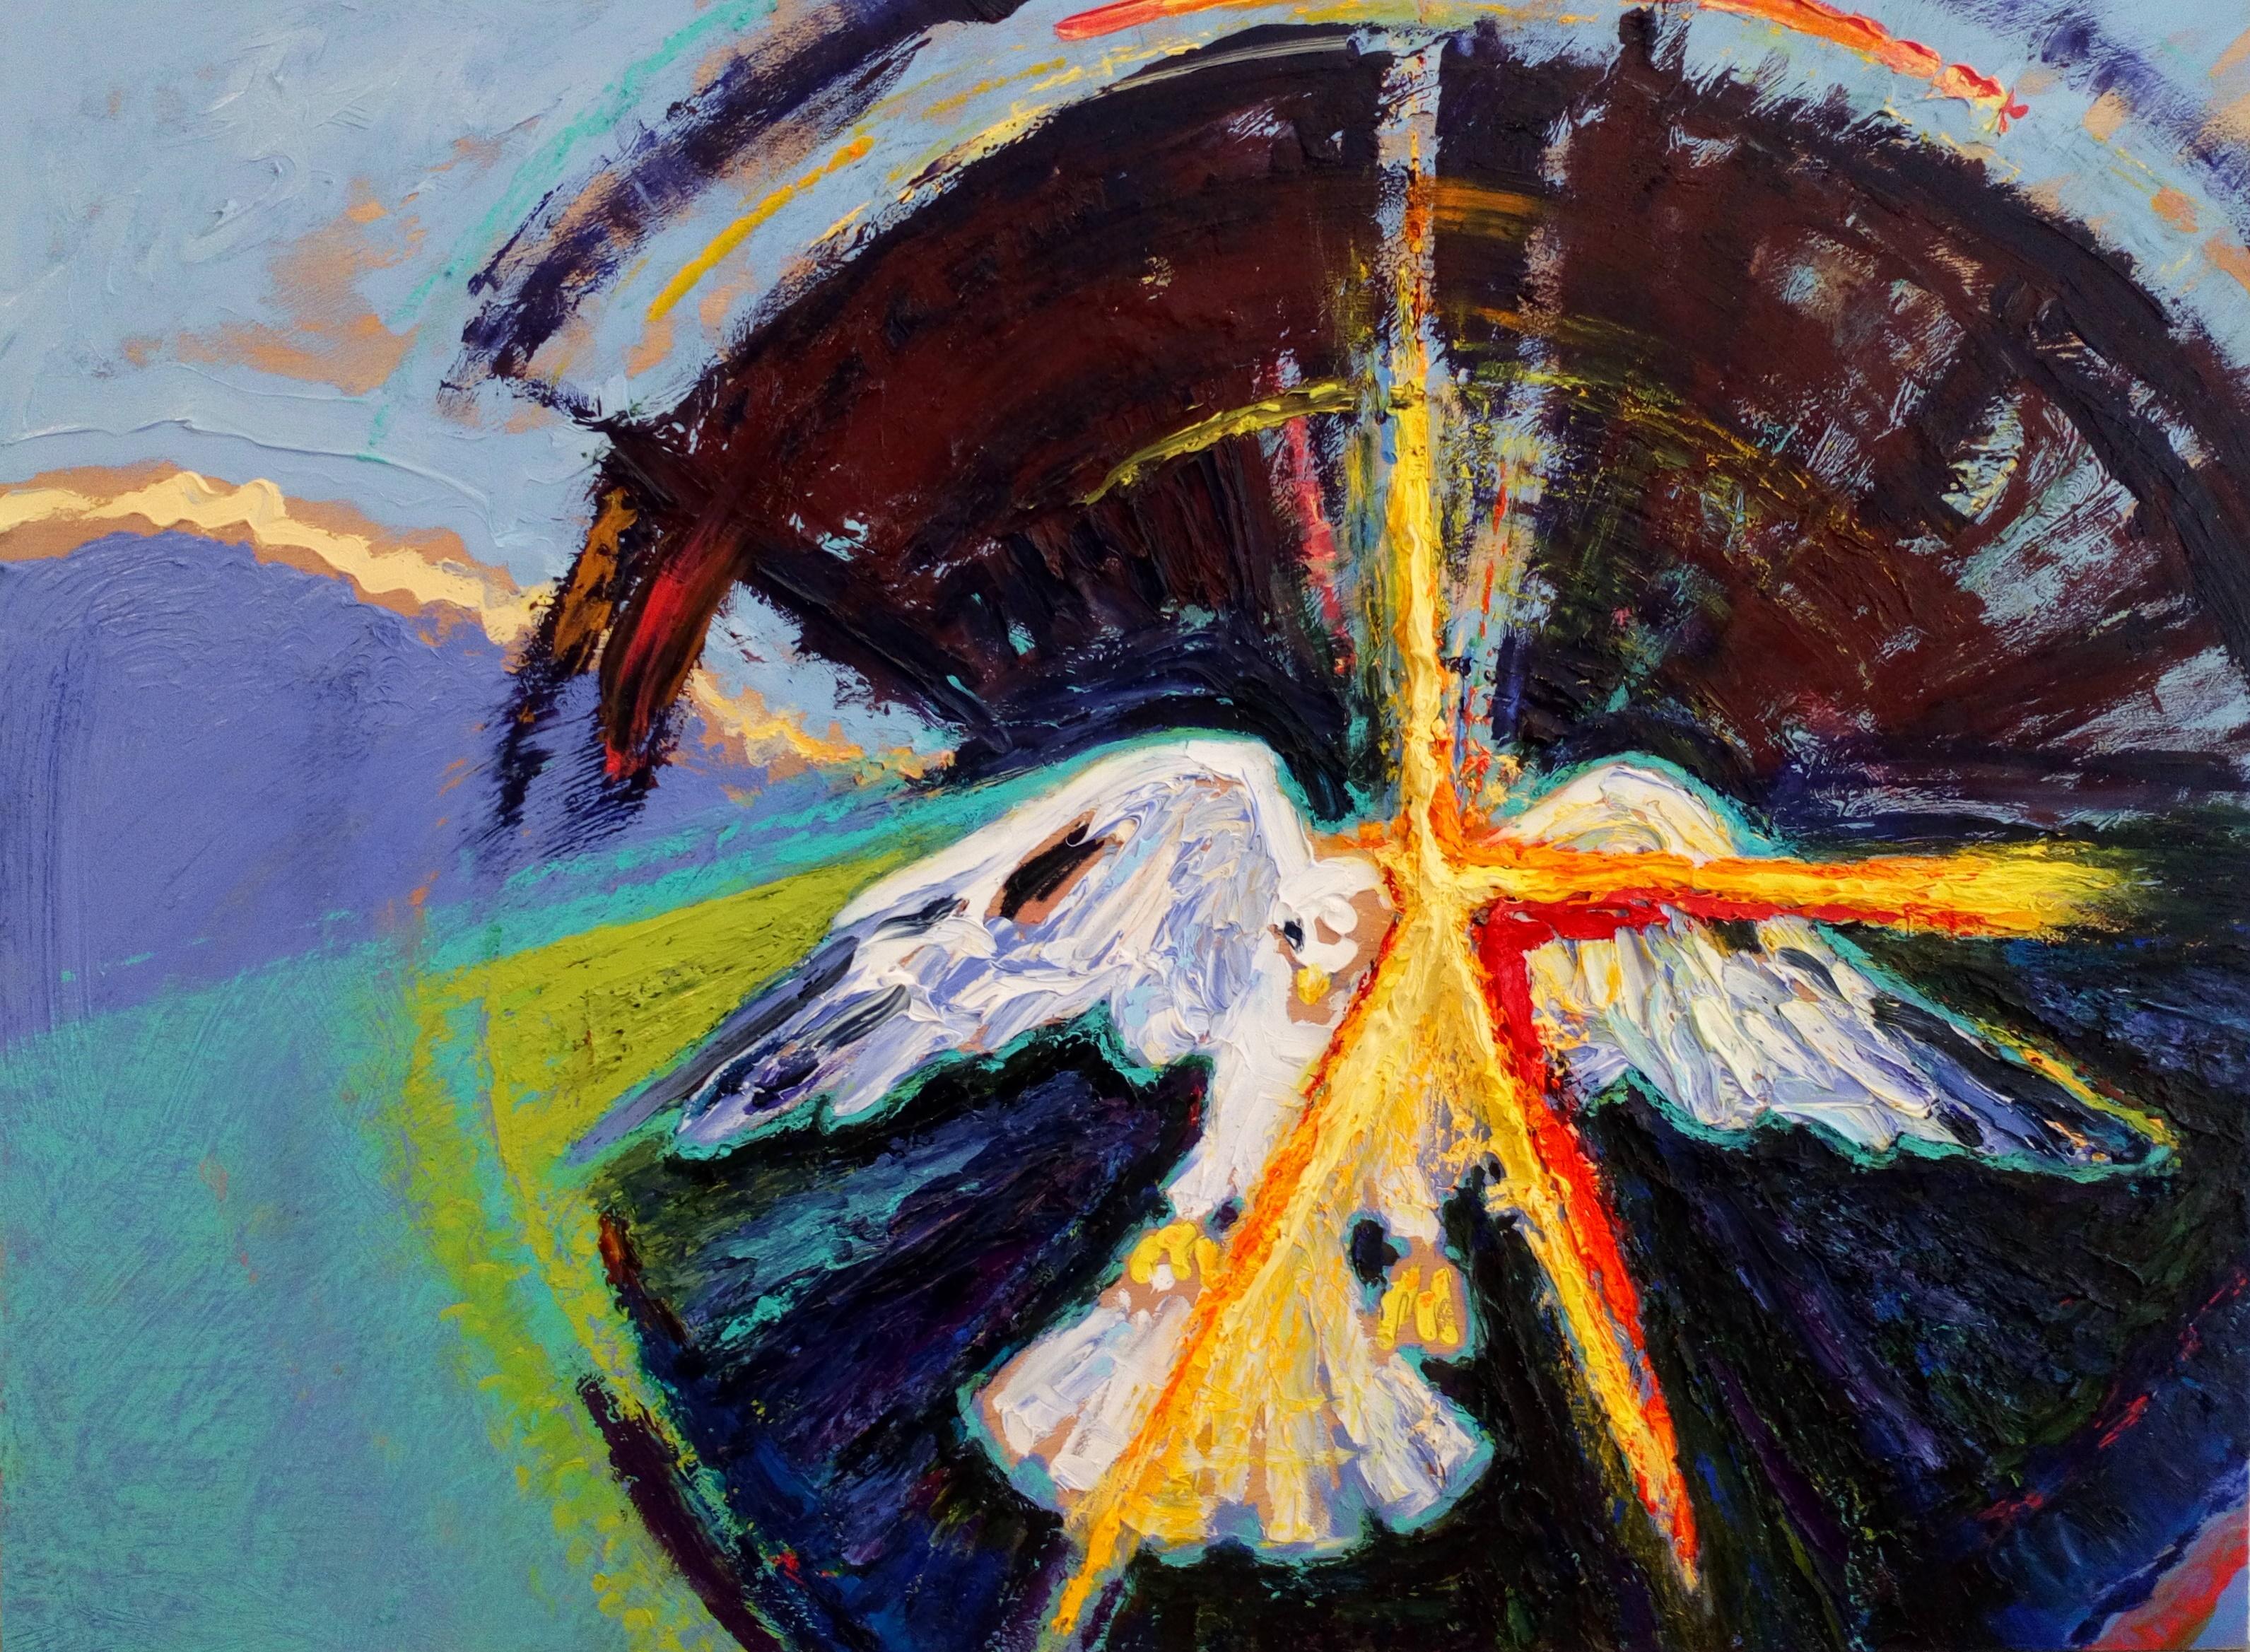 L'œil de la phragmitia Nicolas Kennett Peinture contemporaine oiseau, soleil de nature